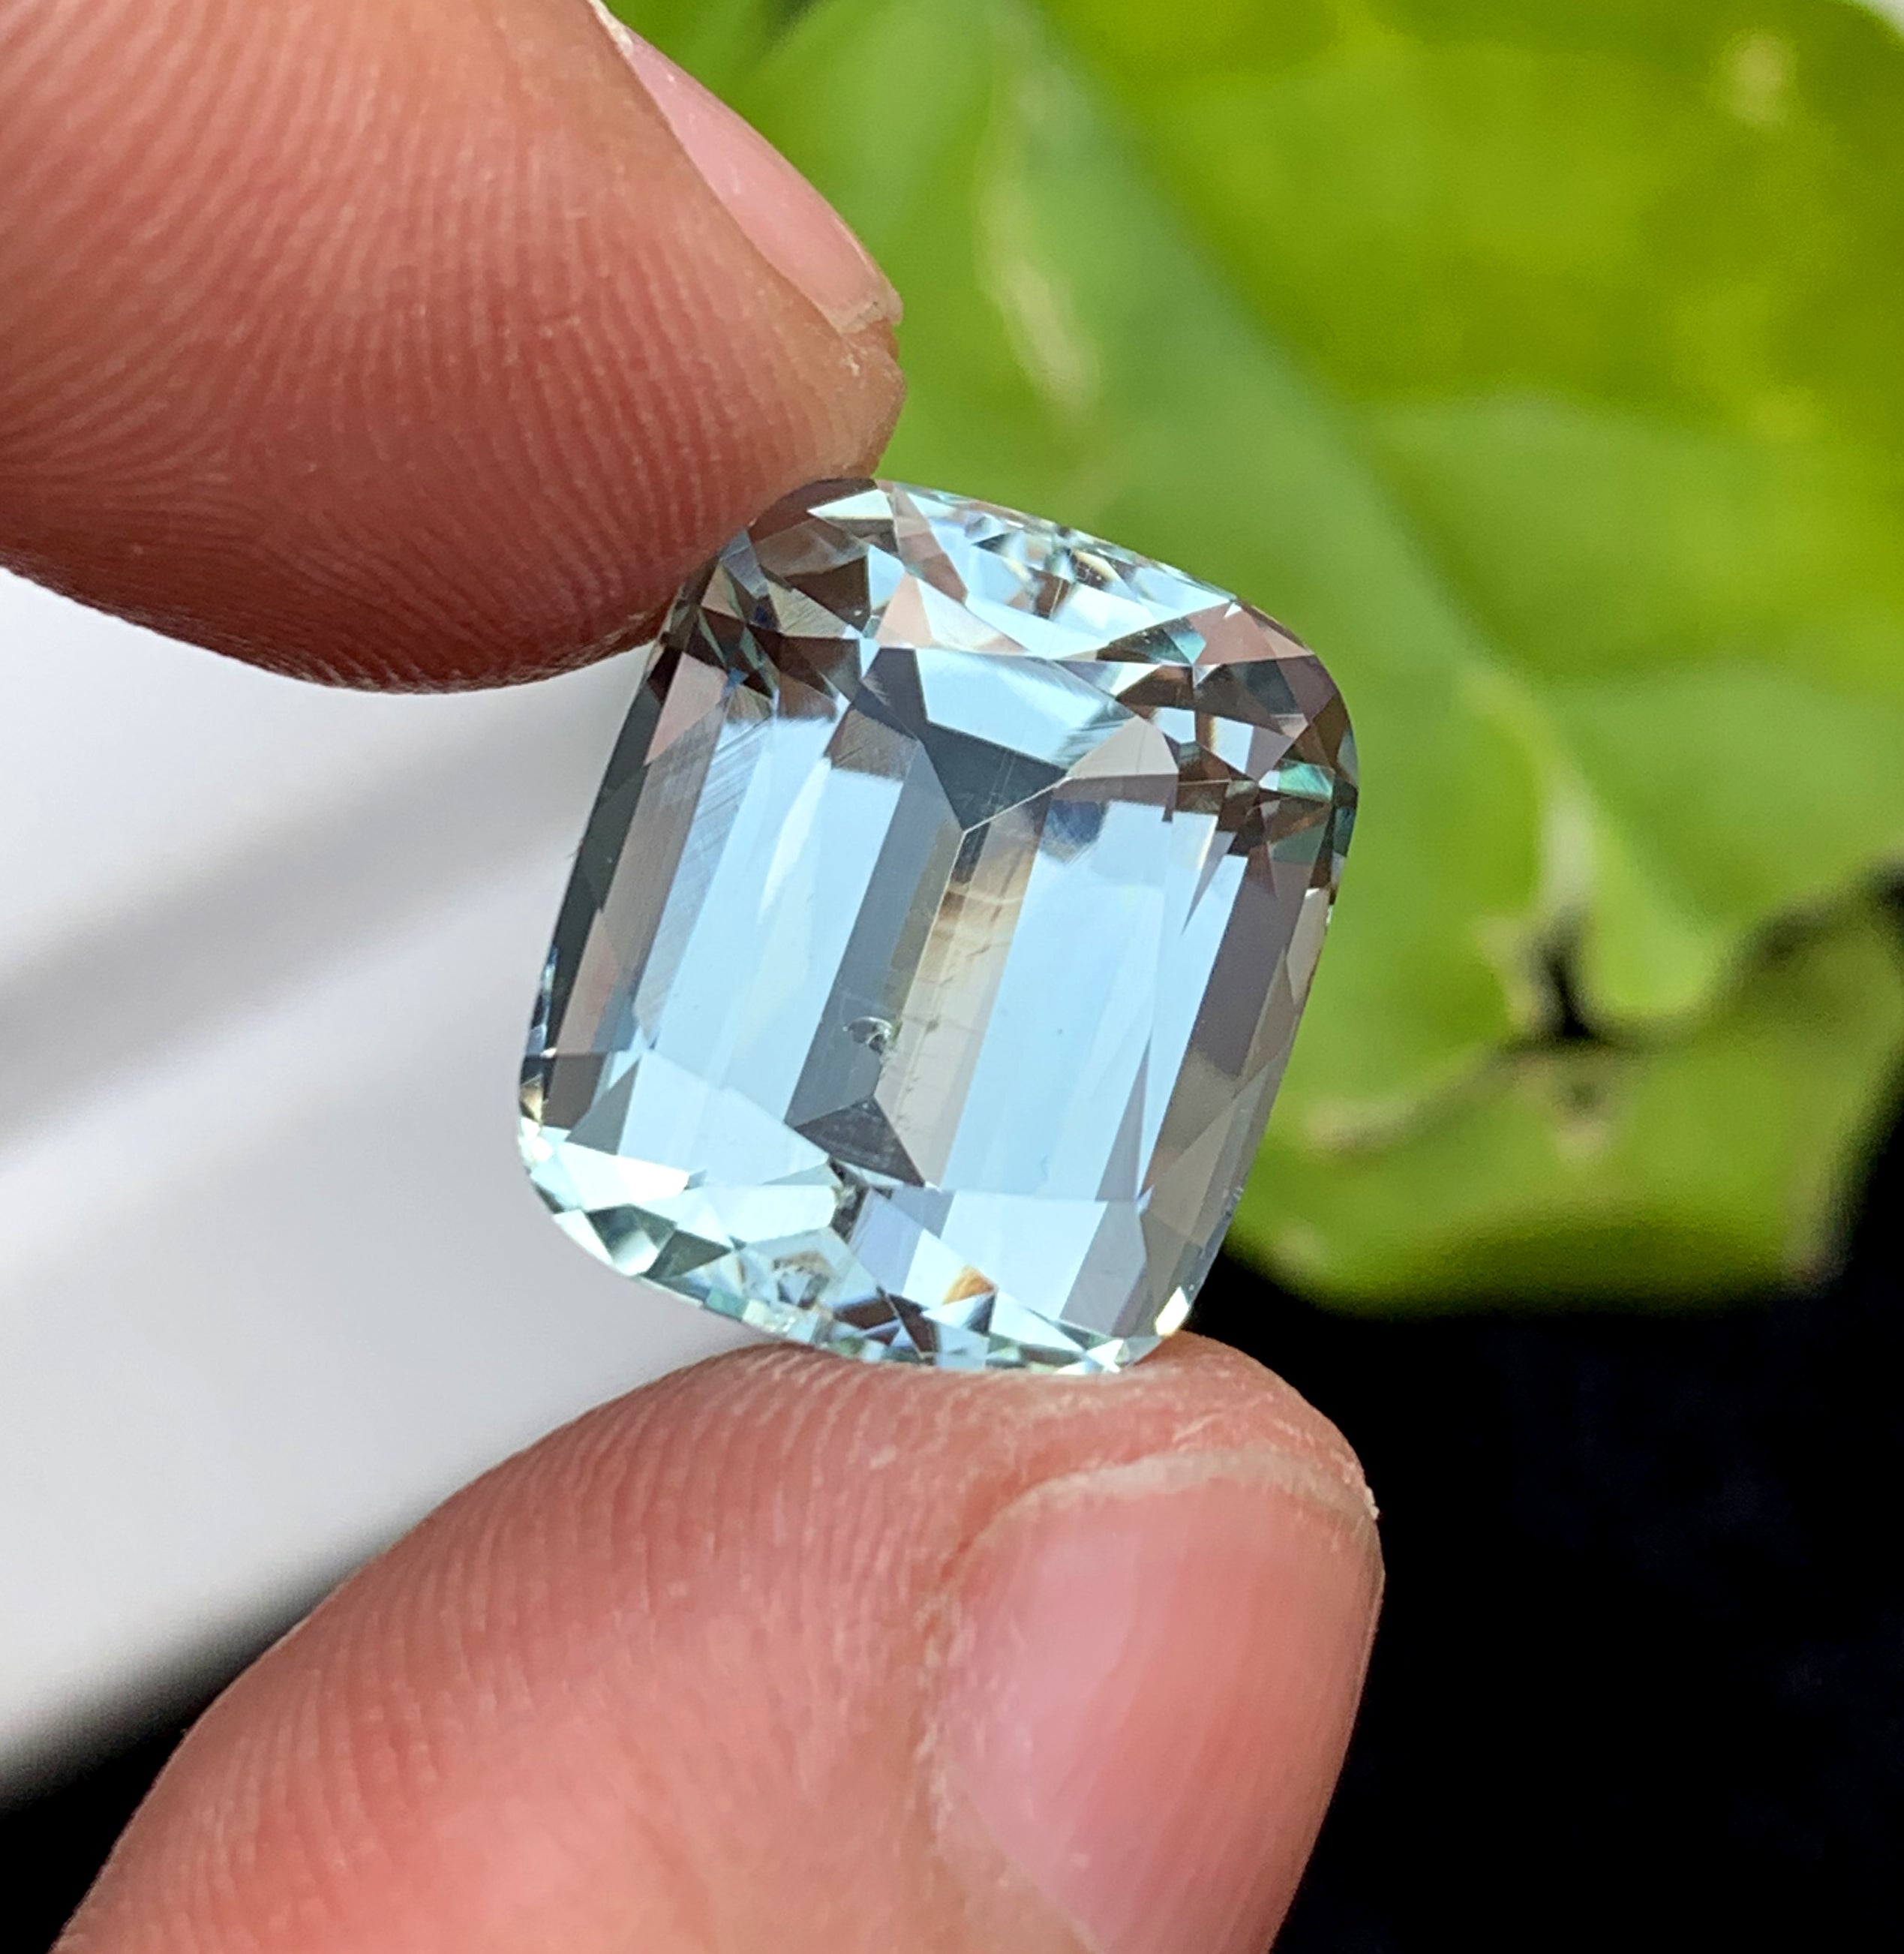 Cusshion Cut Natural Aquamarne Gemstone, Loose Gemstone, Aqua Faceted Cut Stone, Gemstone Jewelry - 11.65 CT